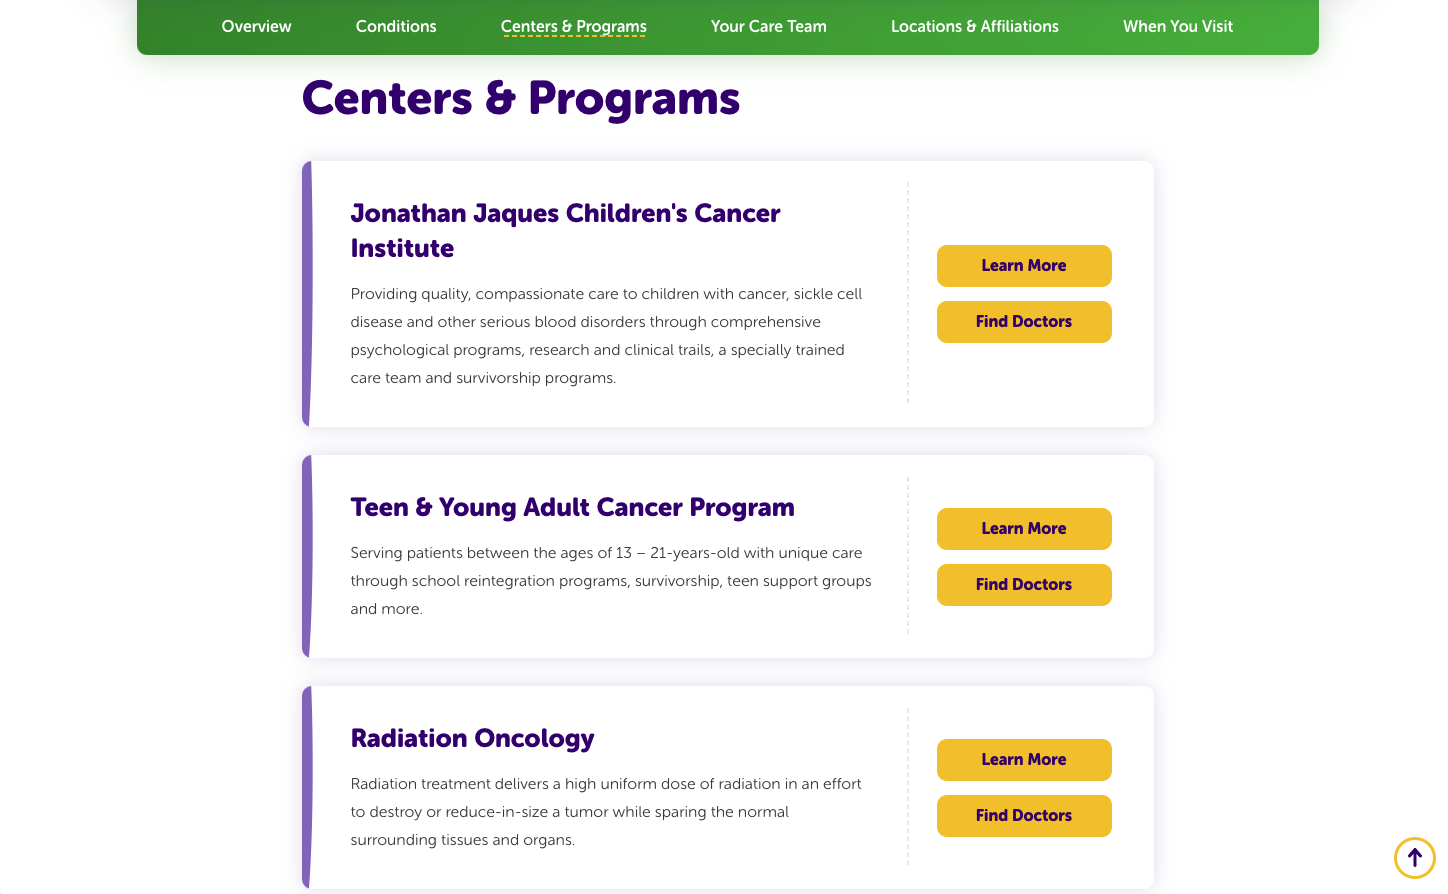 Centers & Programs